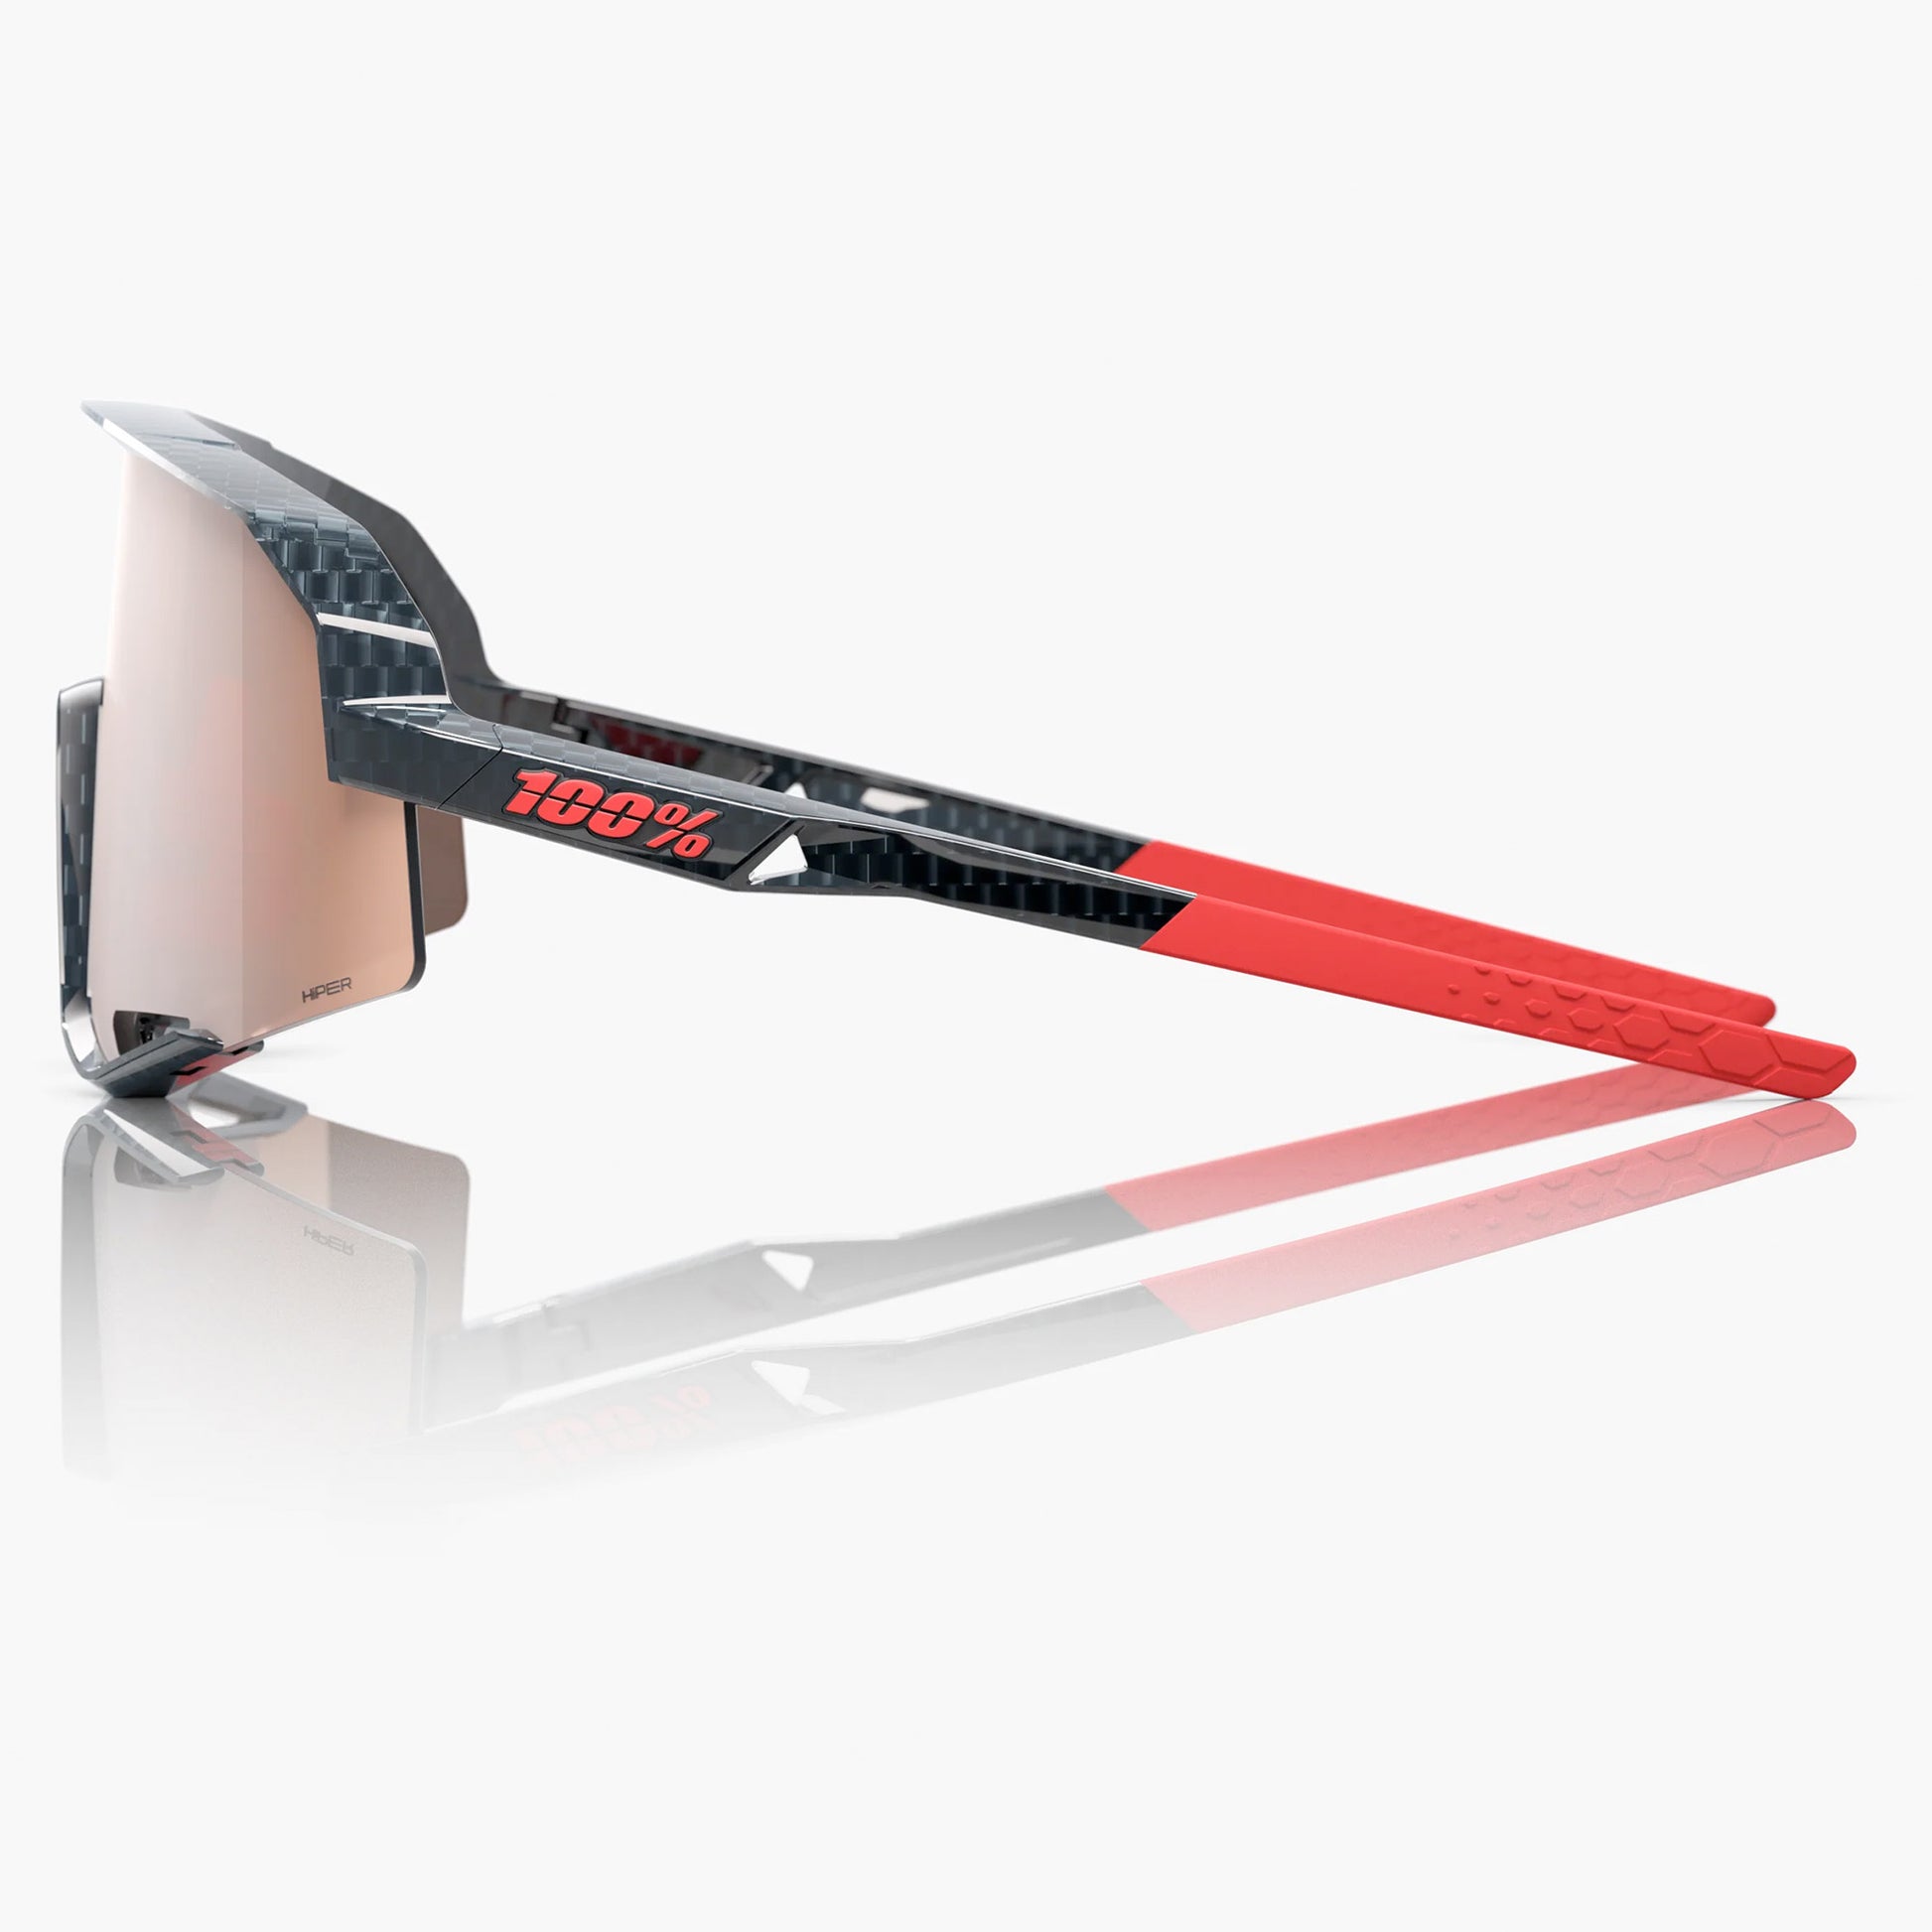 100% Slendale Cycling Sunglasses - Gloss Carbon Fiber